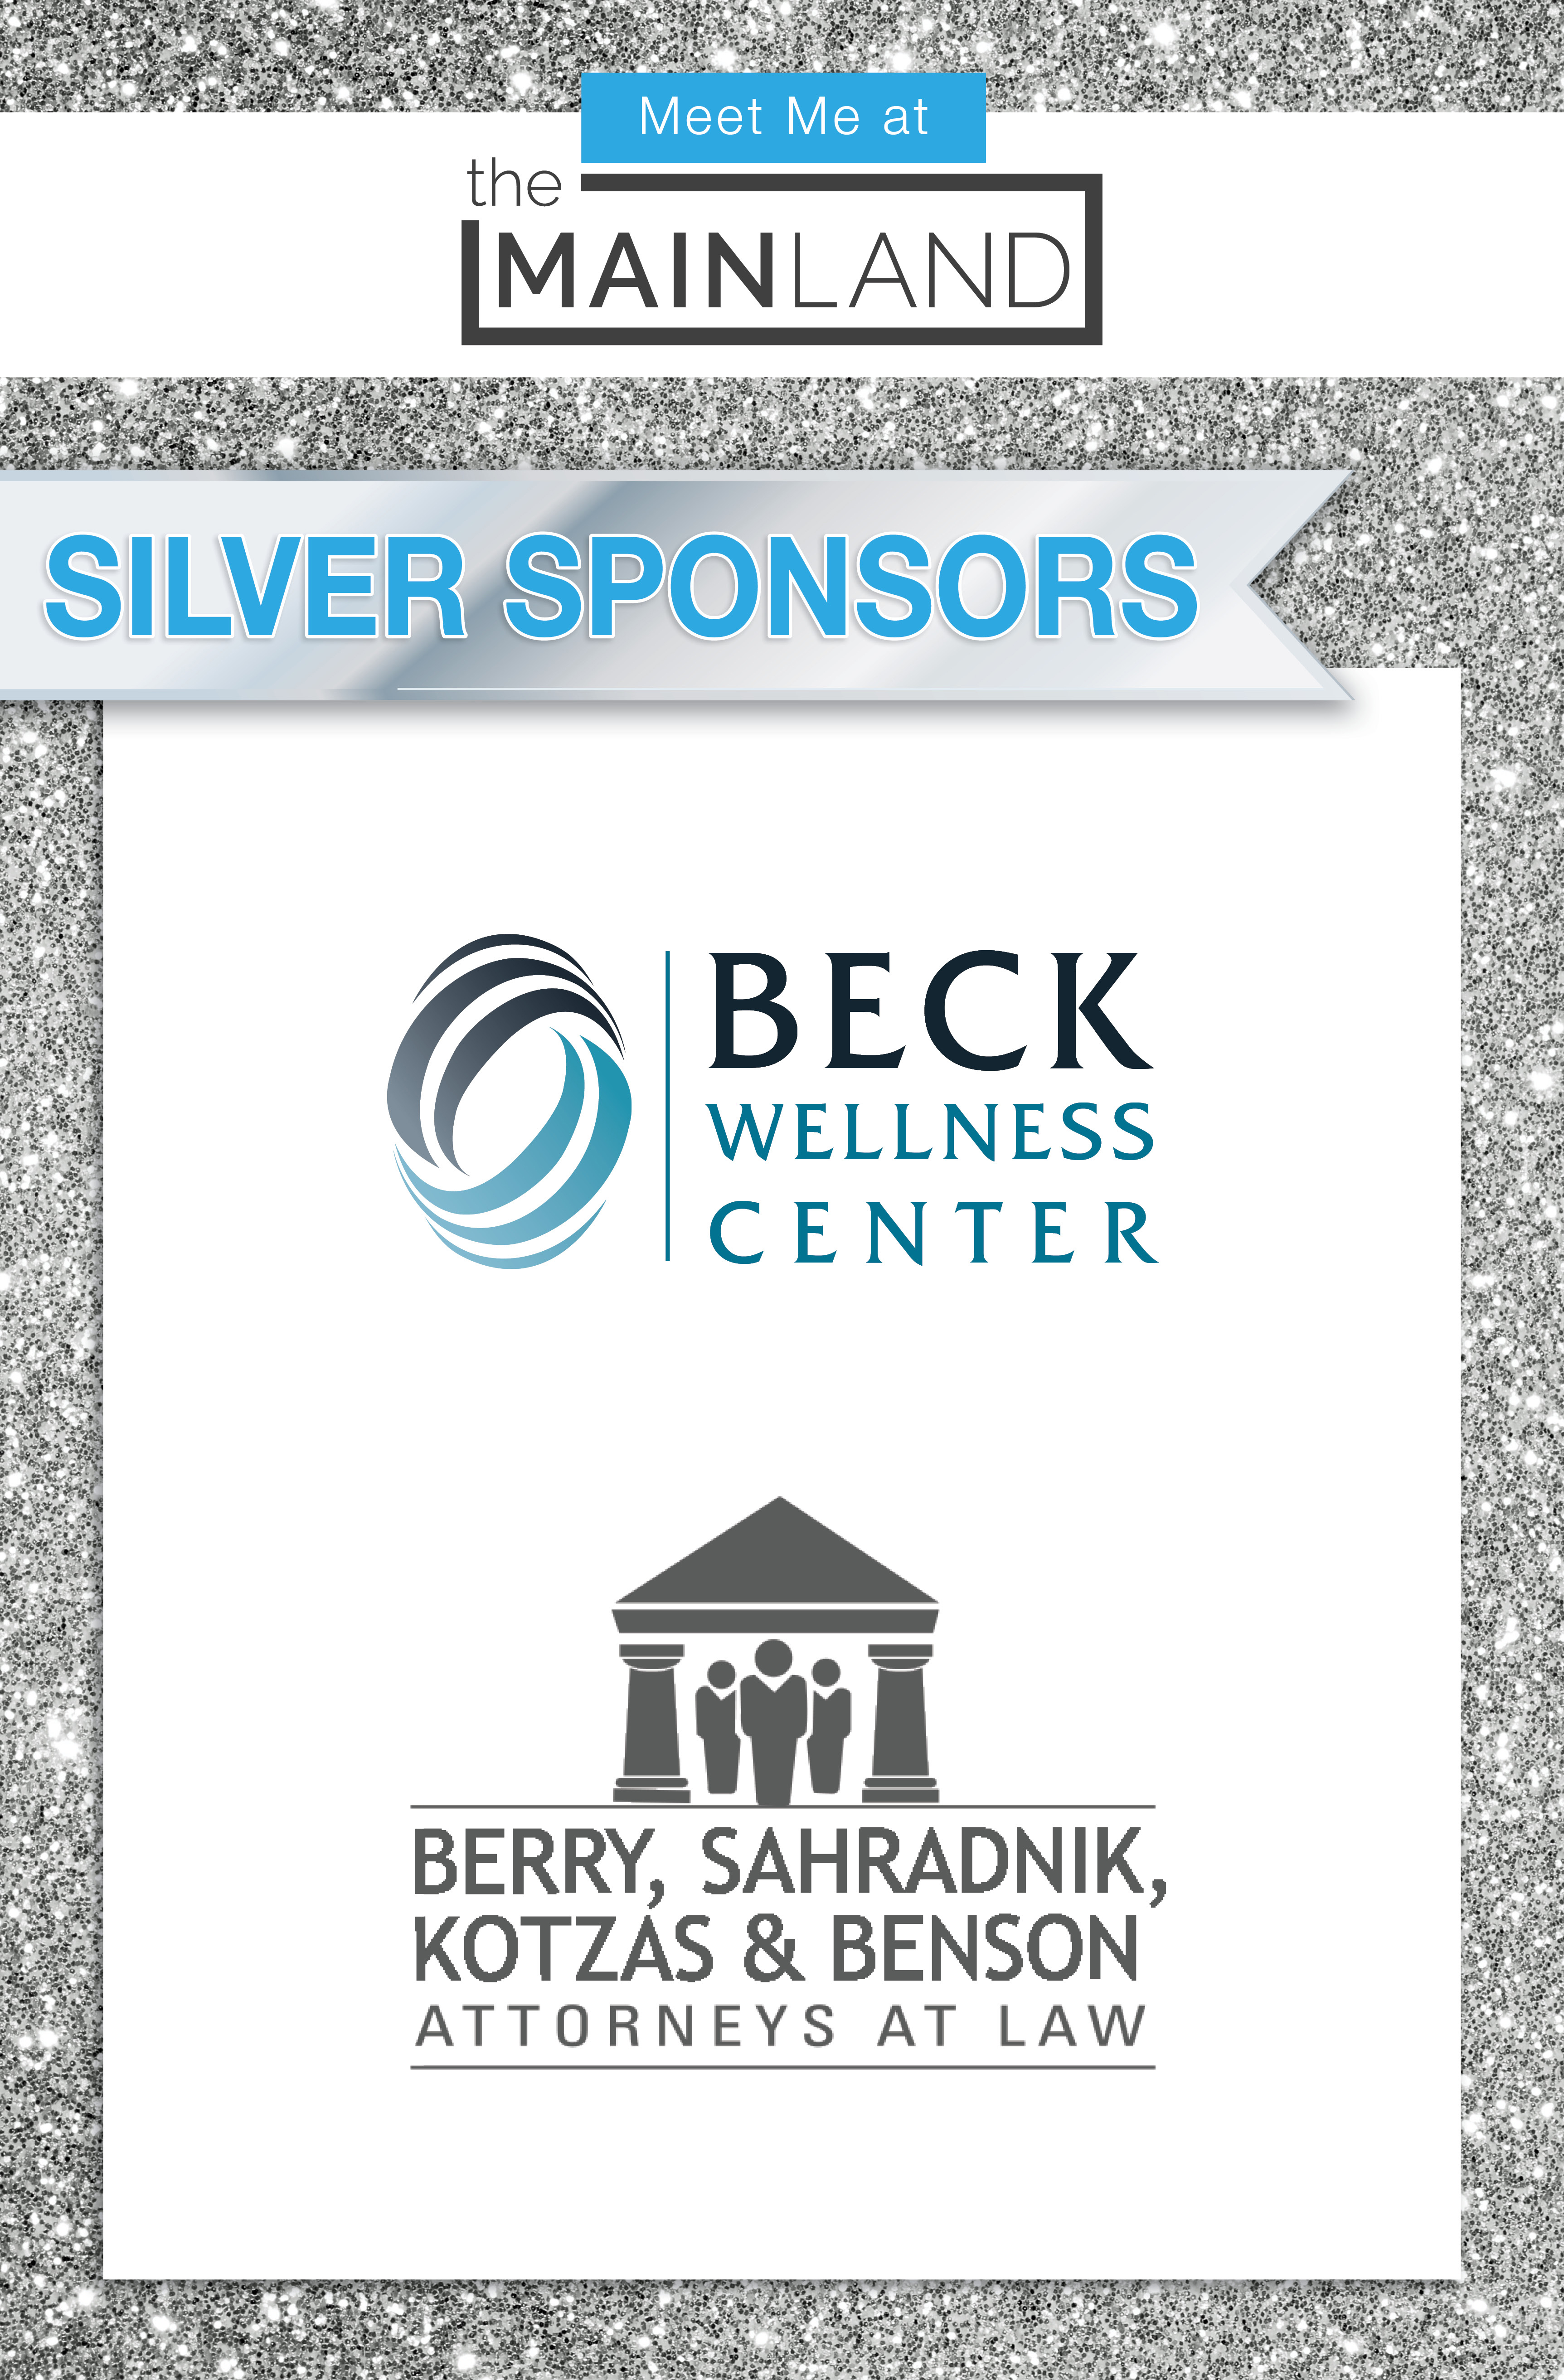 Silver Sponsors Beck Wellness Center and Berry, Sahradnik, Kotzas, & Benson Attorneys At Law